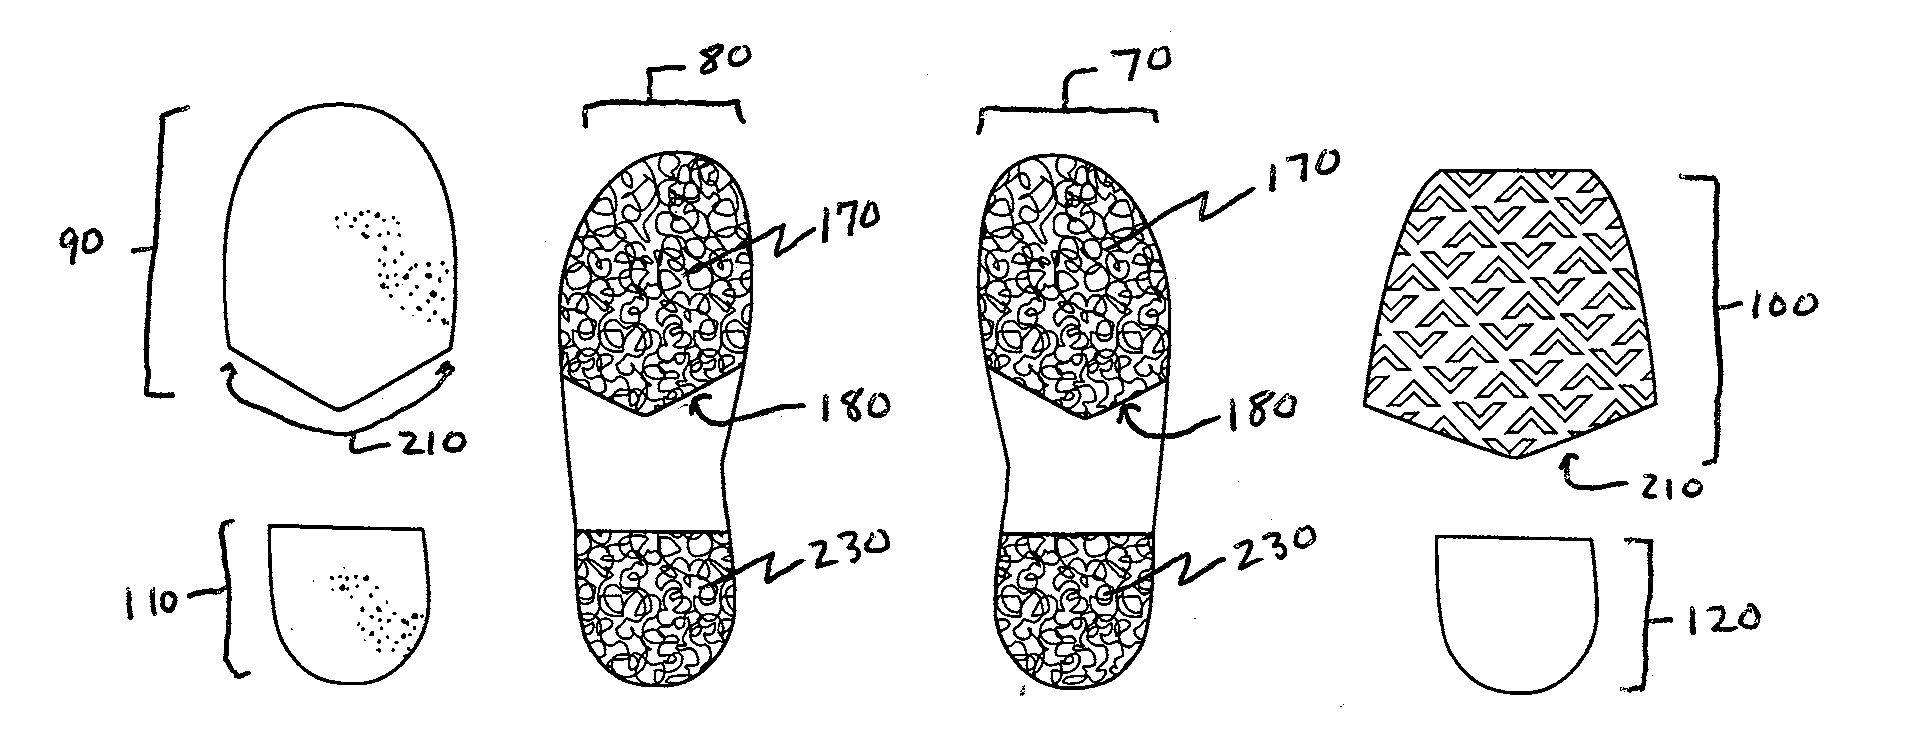 Footwear Kit with Adjustable Foreparts